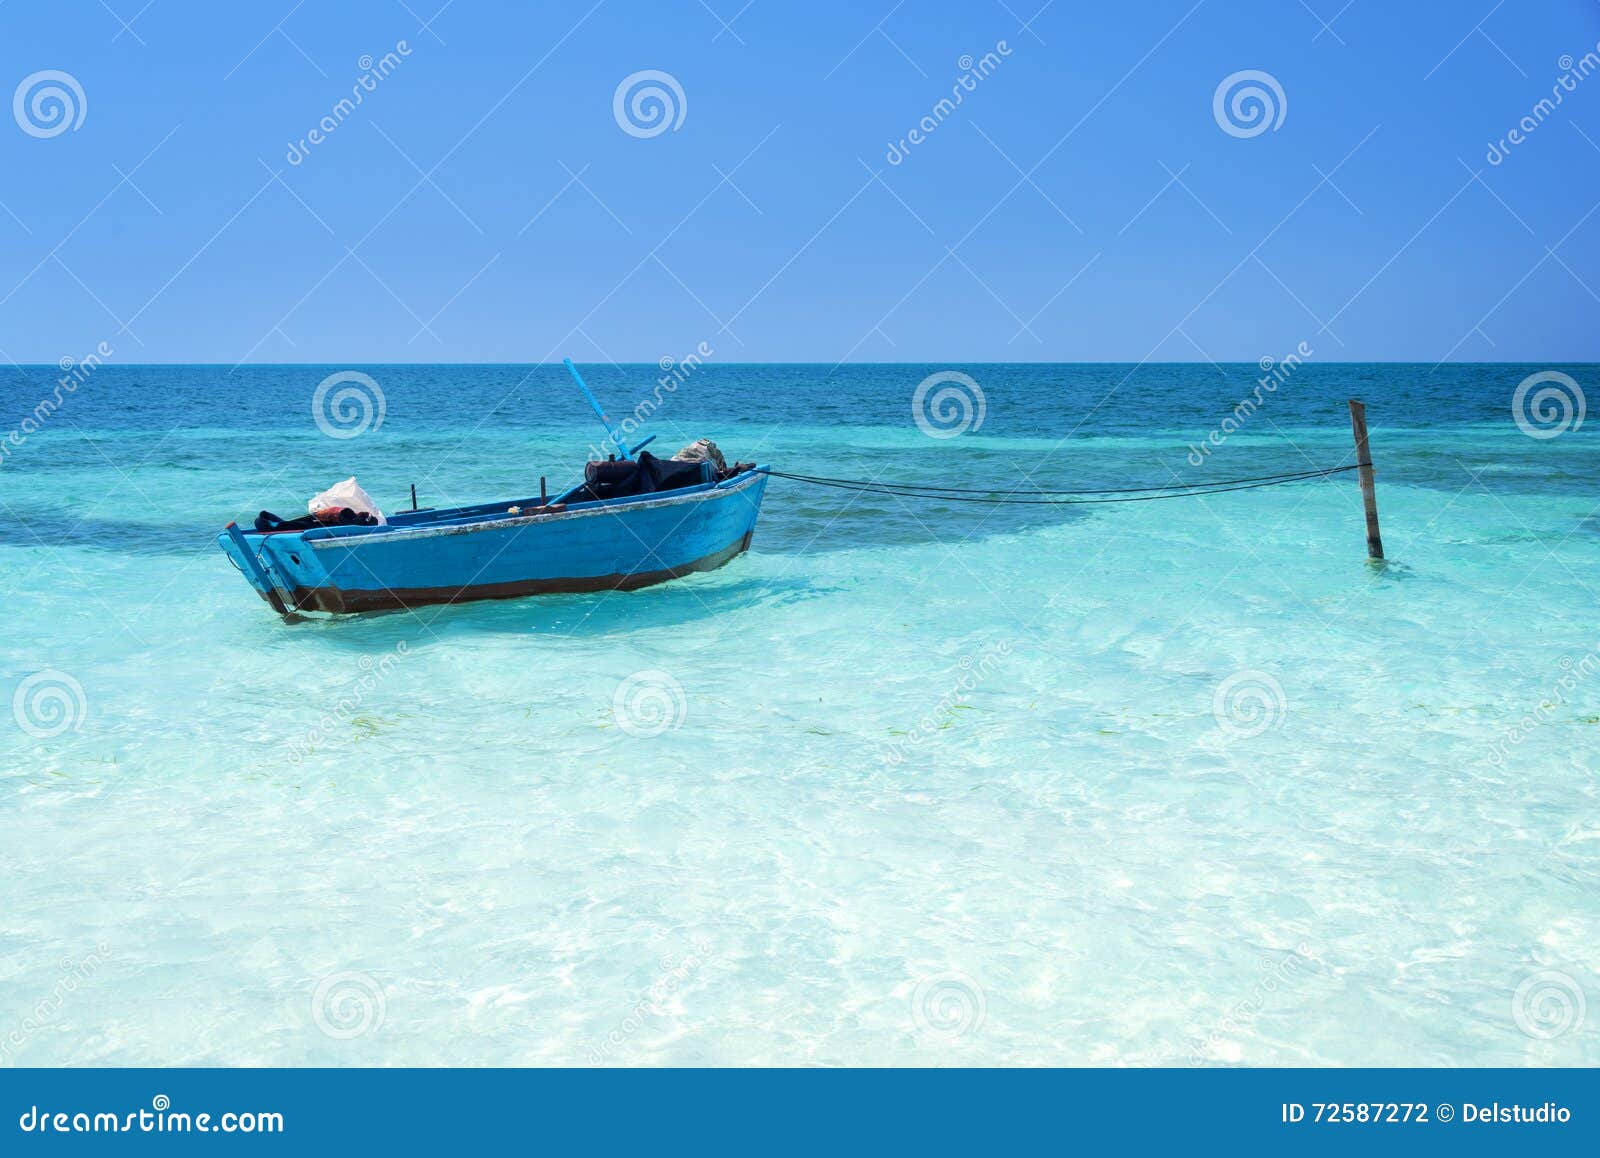 blue boat, cayo levisa cuba